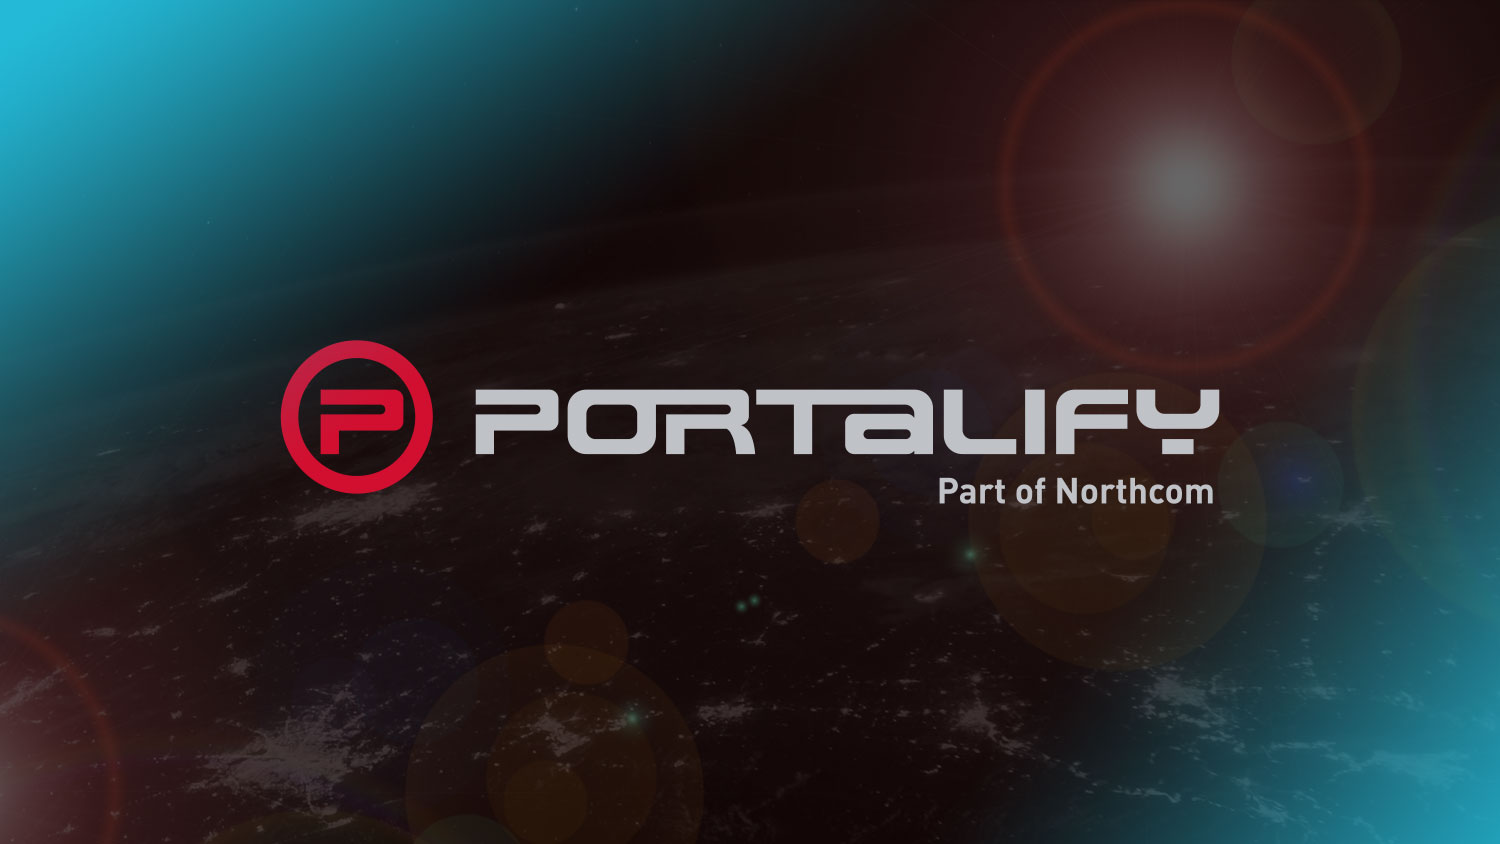 Northcom acquires Finnish tech company Portalify